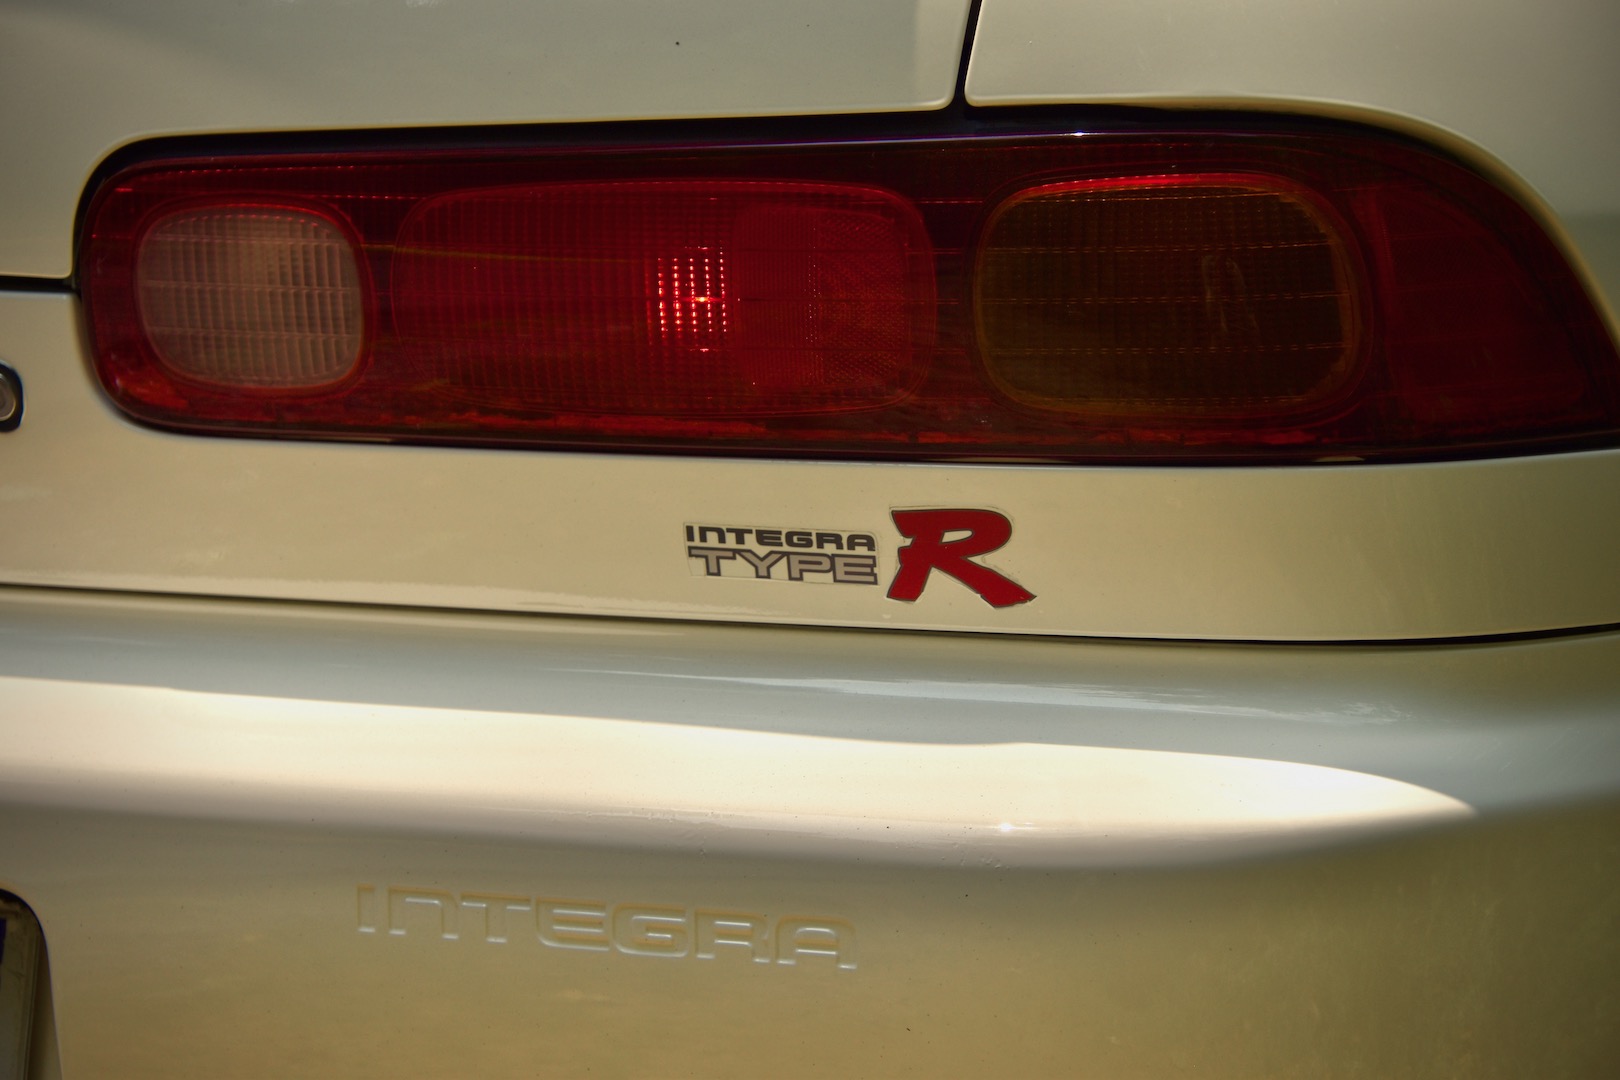 1996 Honda Integra Type R taillight and Type R sticker